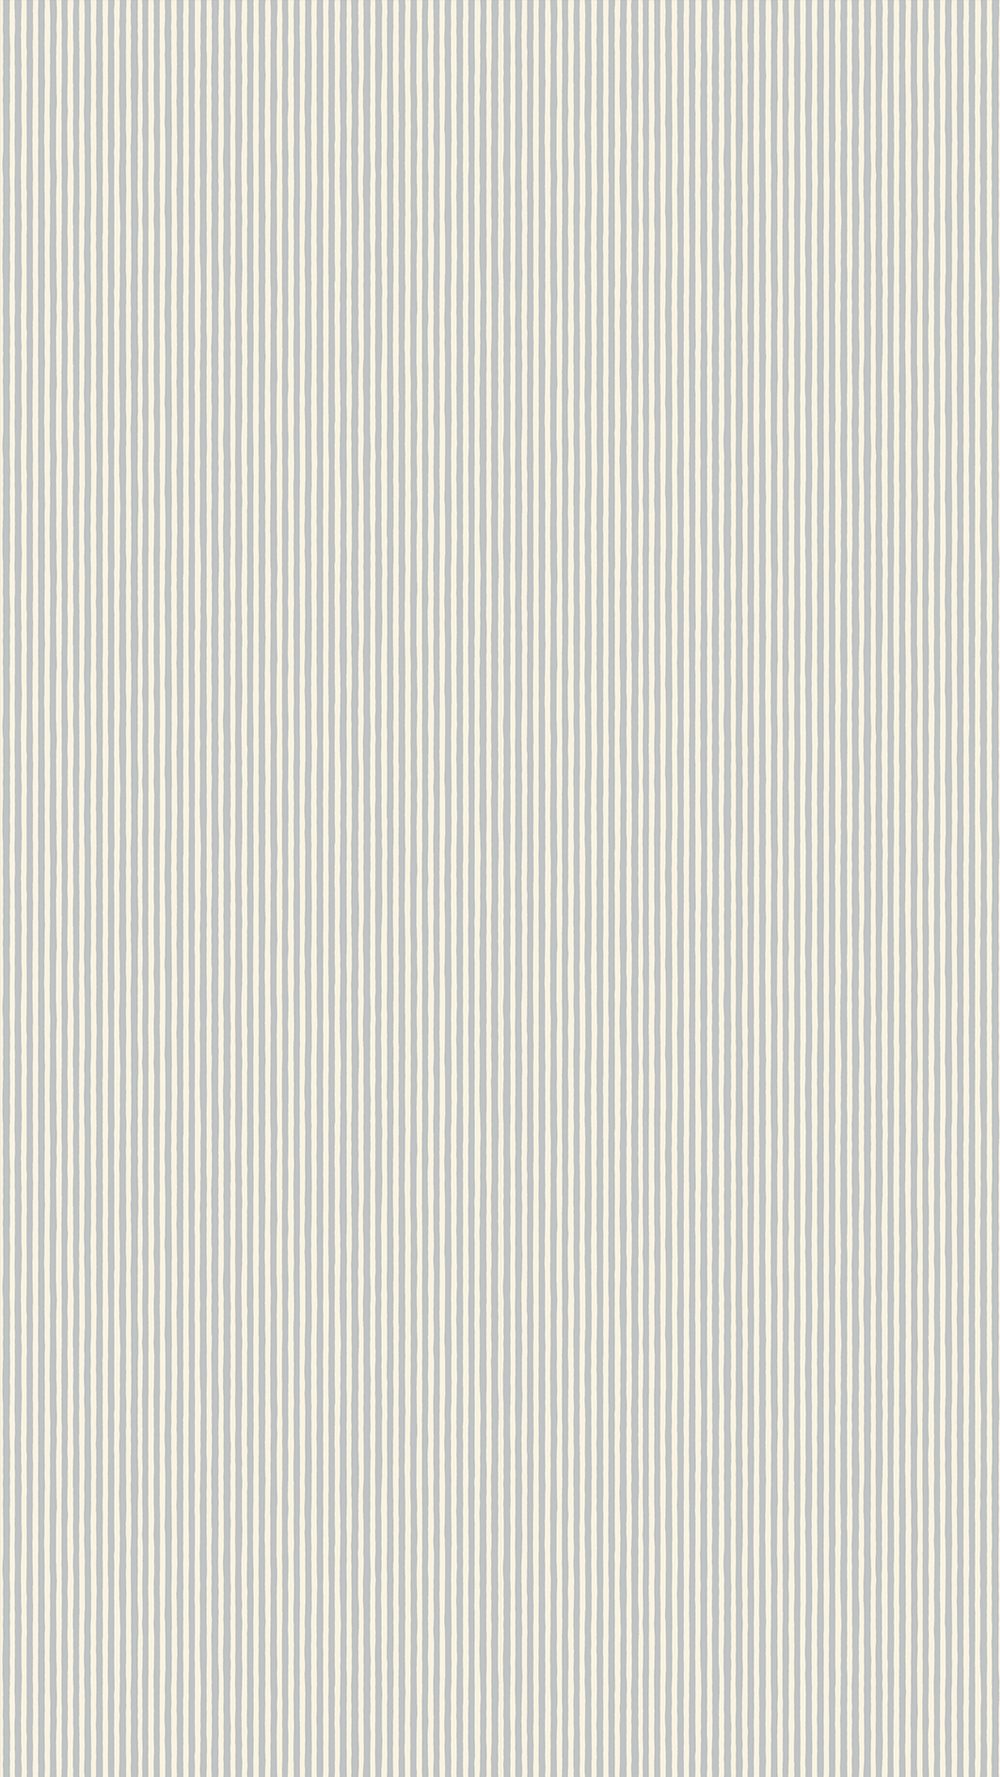 HPS-034-048 - Hand Painted Stripe - Barton Blue - Costwold White - Small Flat Shot